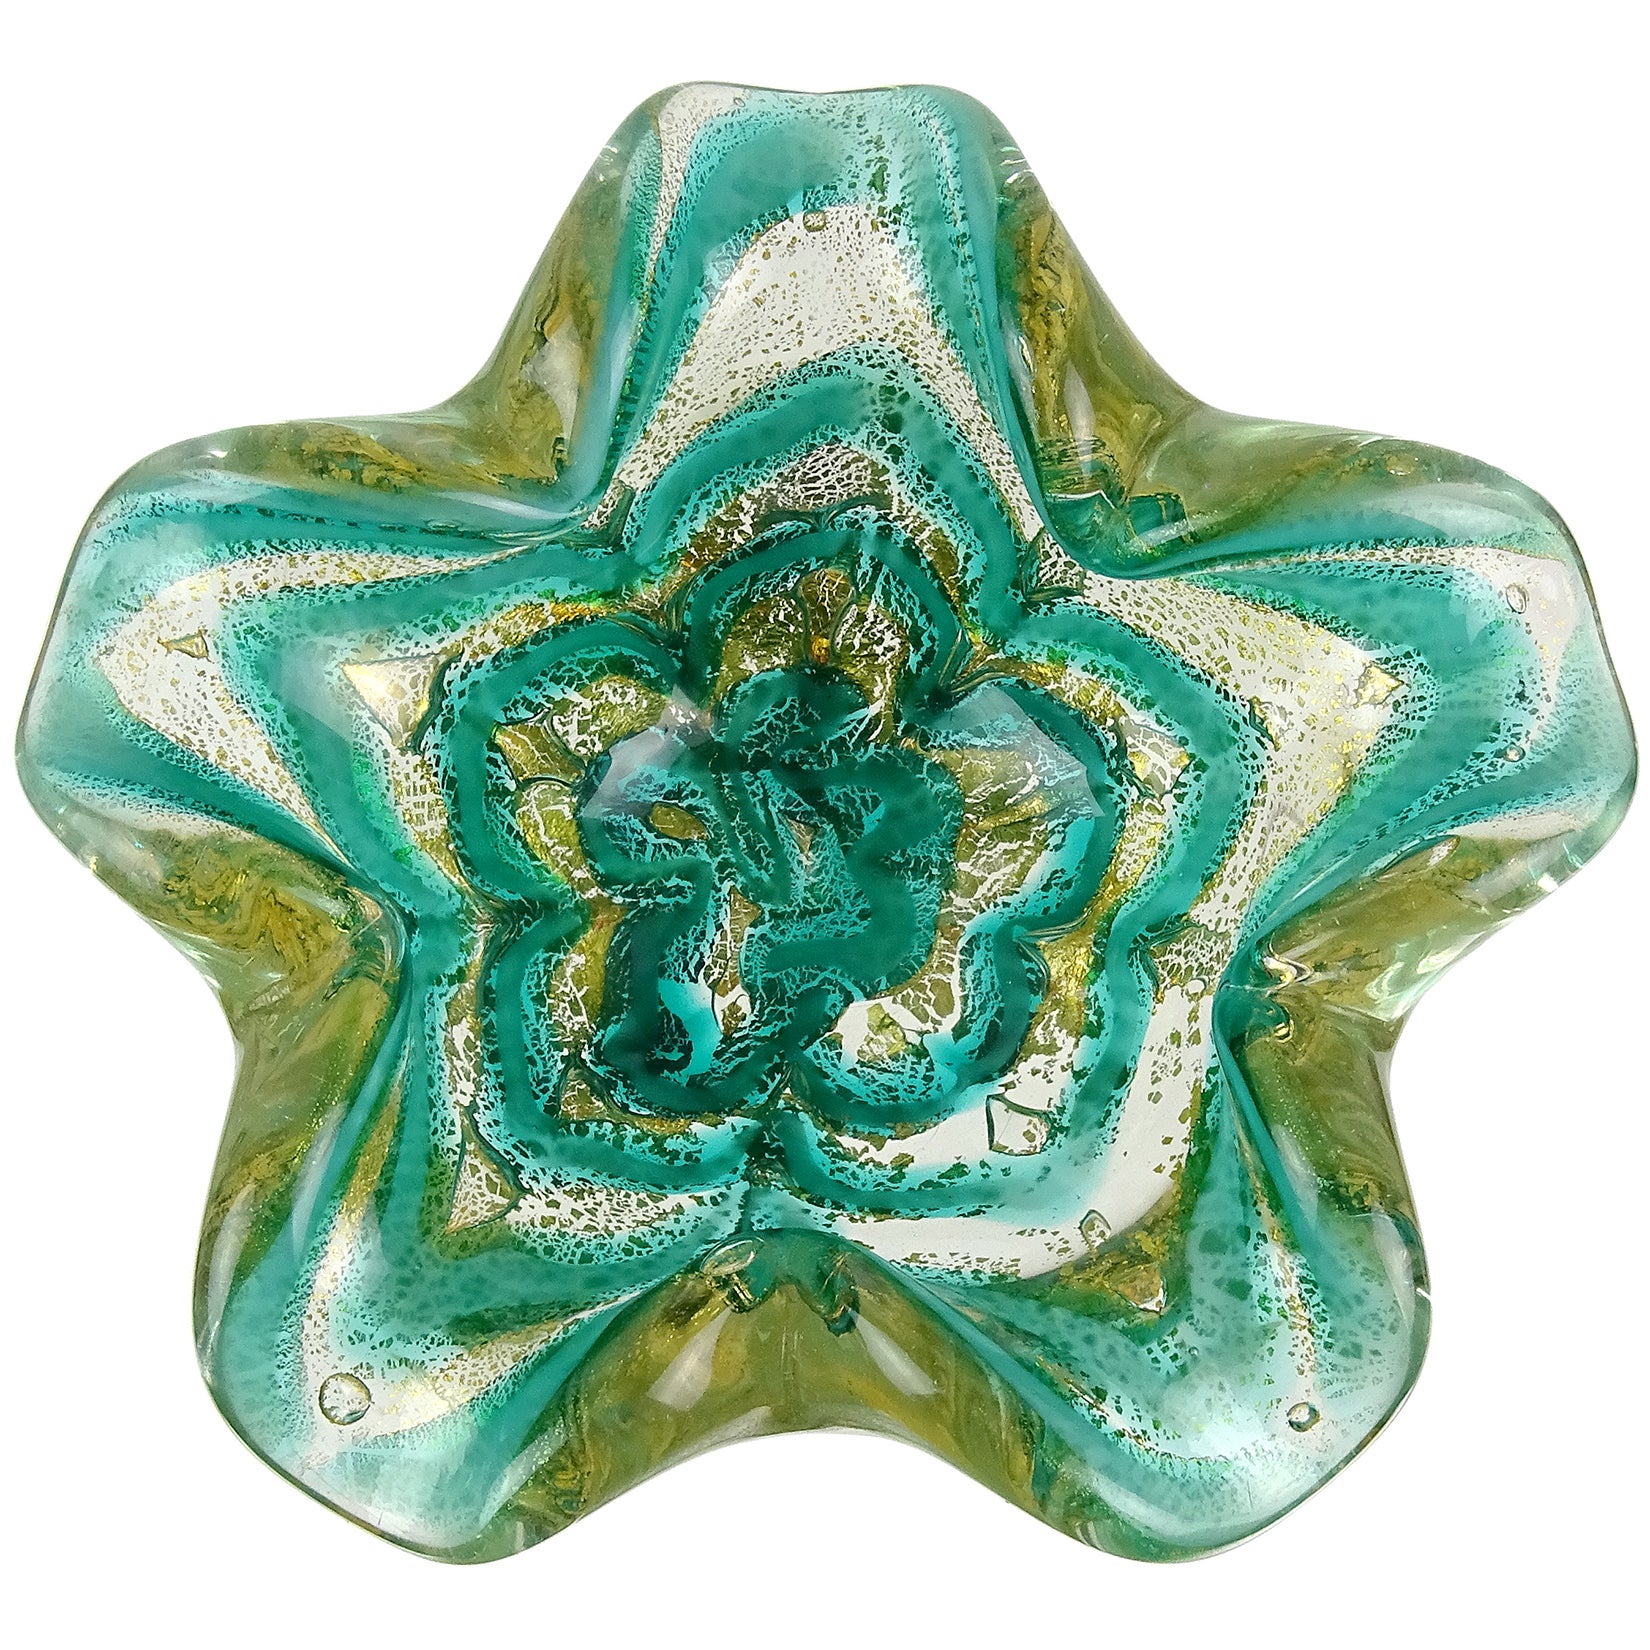 Barovier Toso Murano Green Gold Flecks Italian Art Glass Decorative Flower Bowl